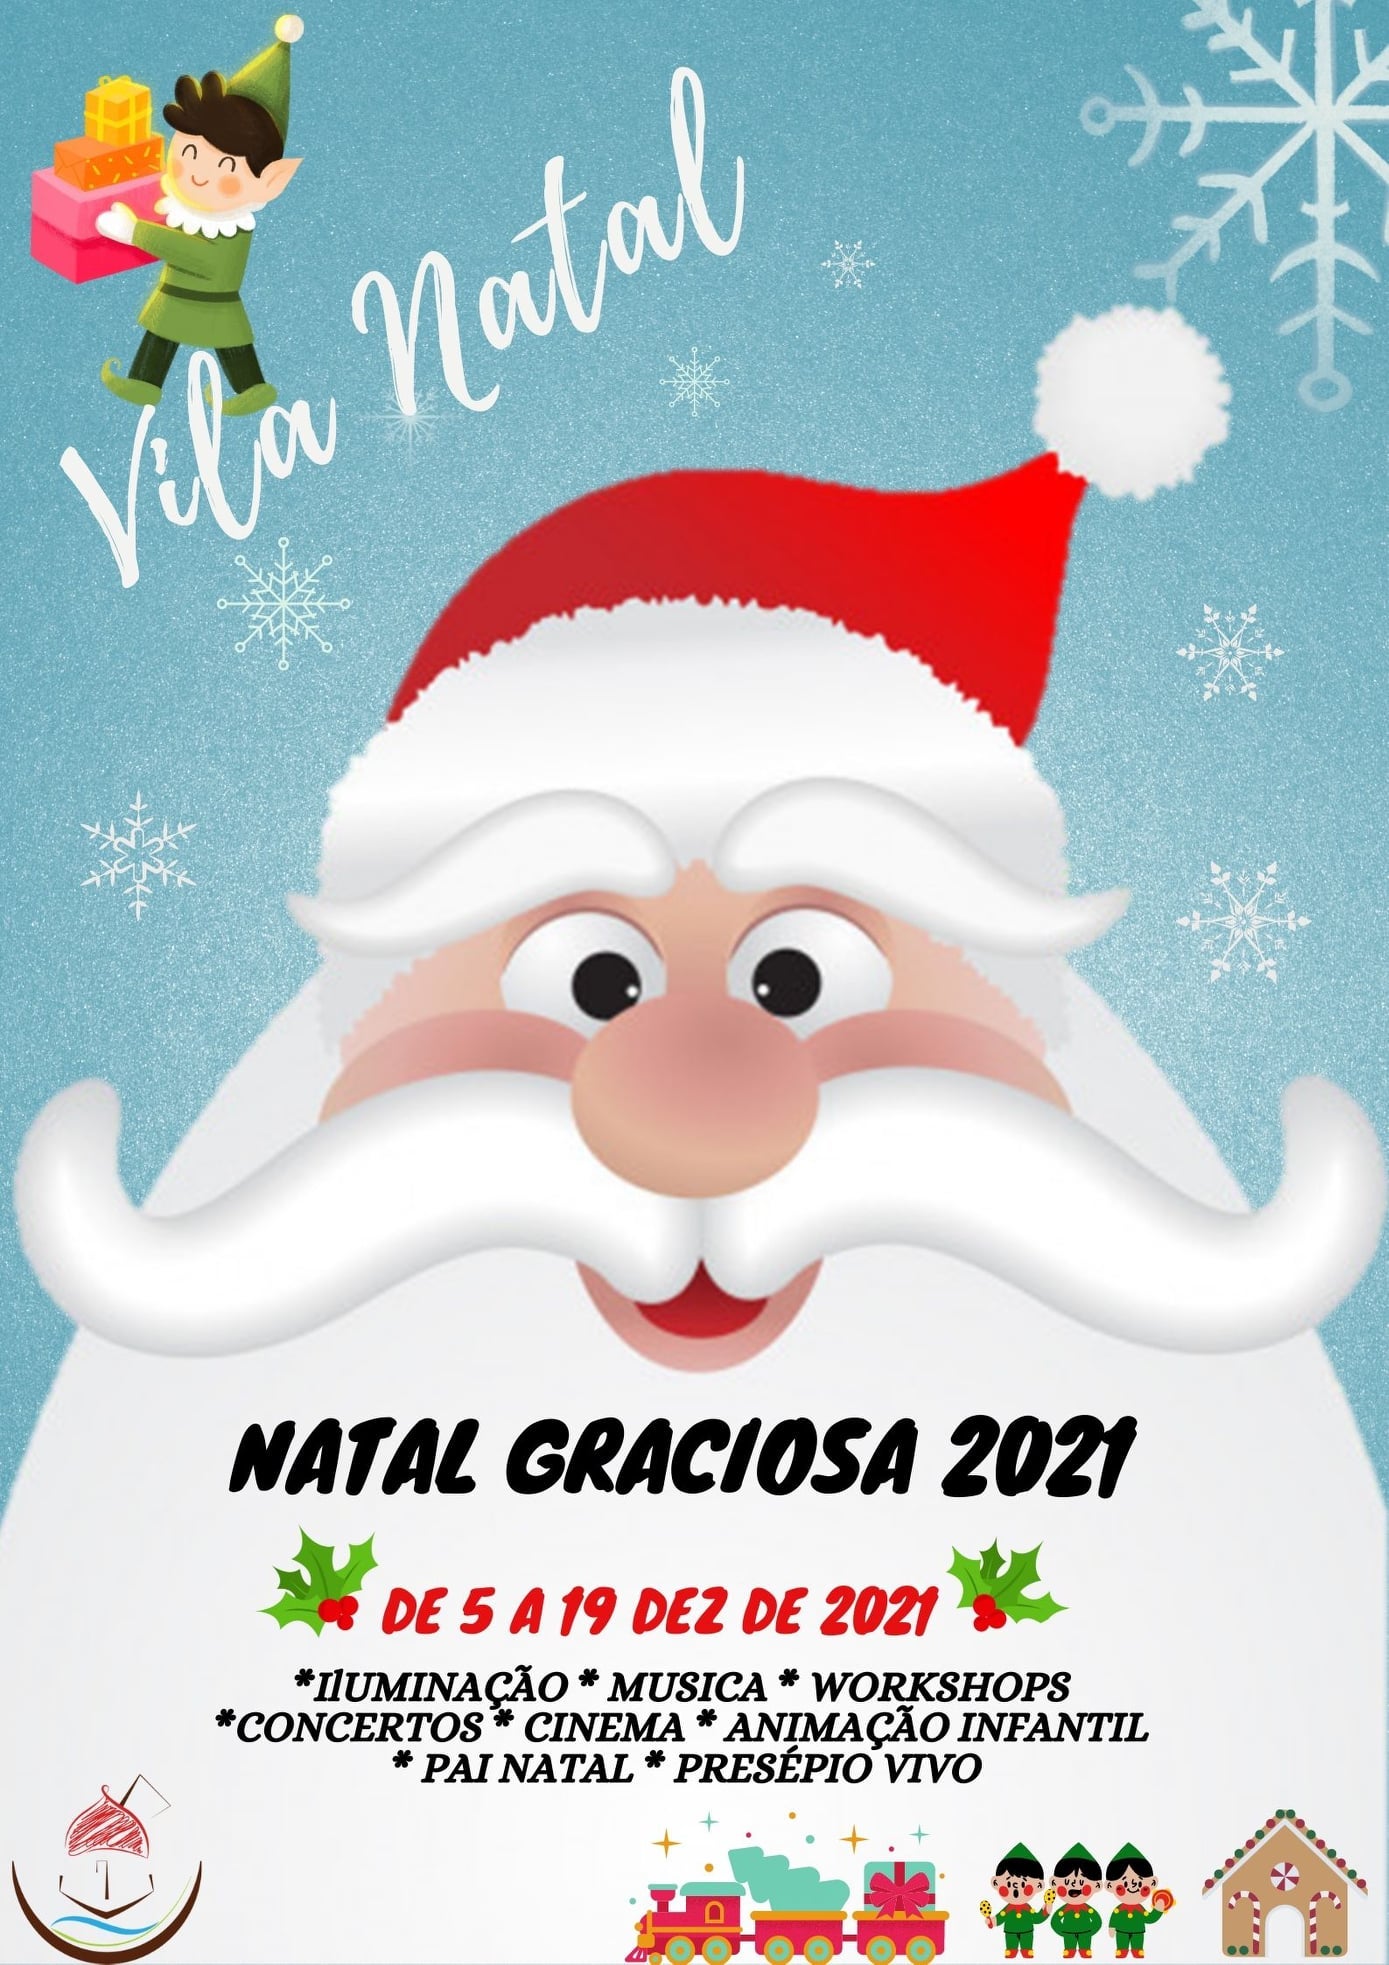 Natal 2021 - Graciosa Online - RTP Açores - RTP